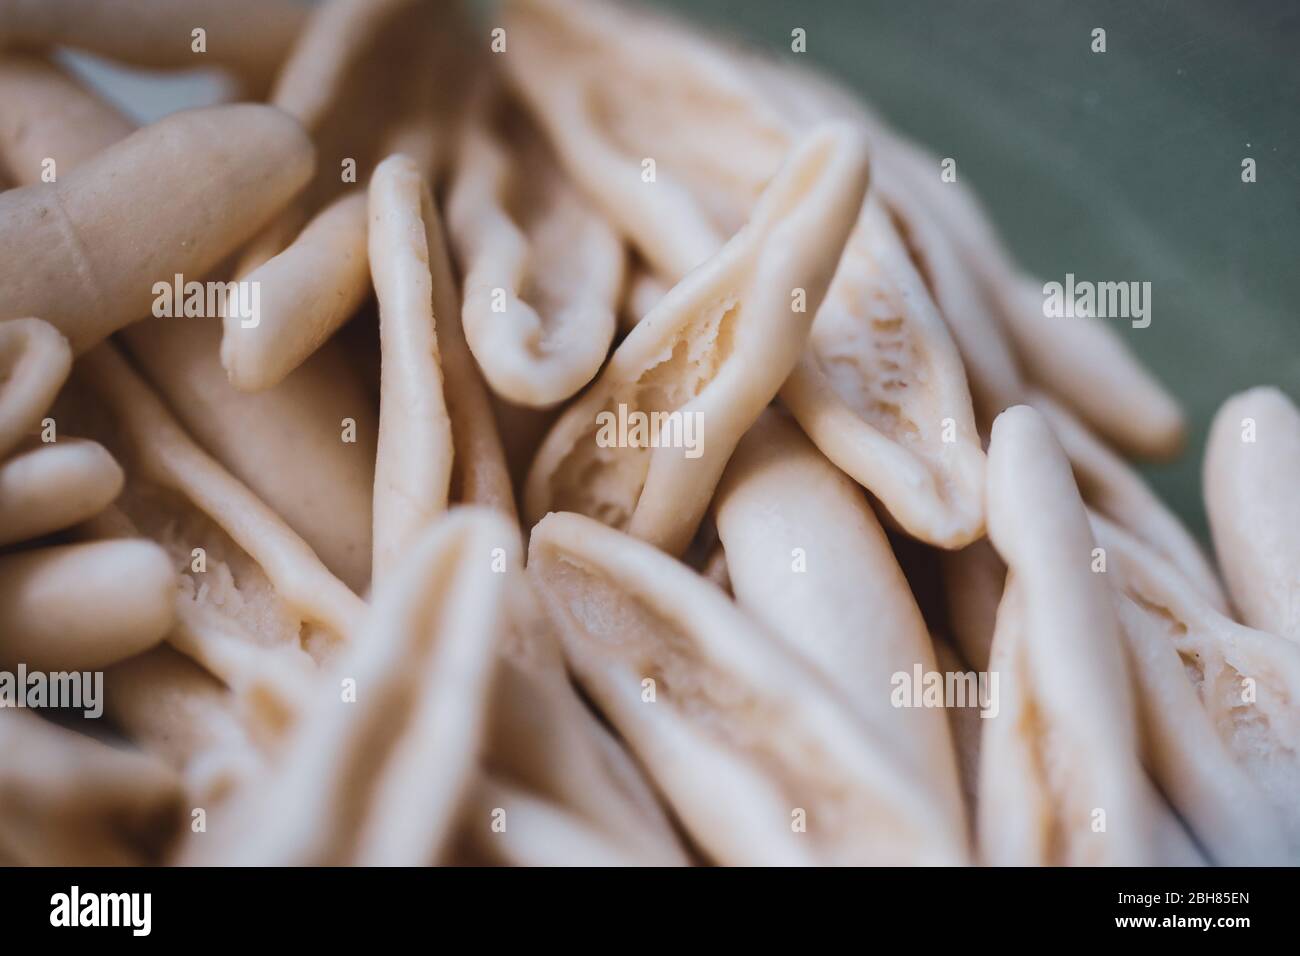 Geringe Schärfentiefe (selektiver Fokus) und Makrobild mit Fagiolini Pasta. Stockfoto